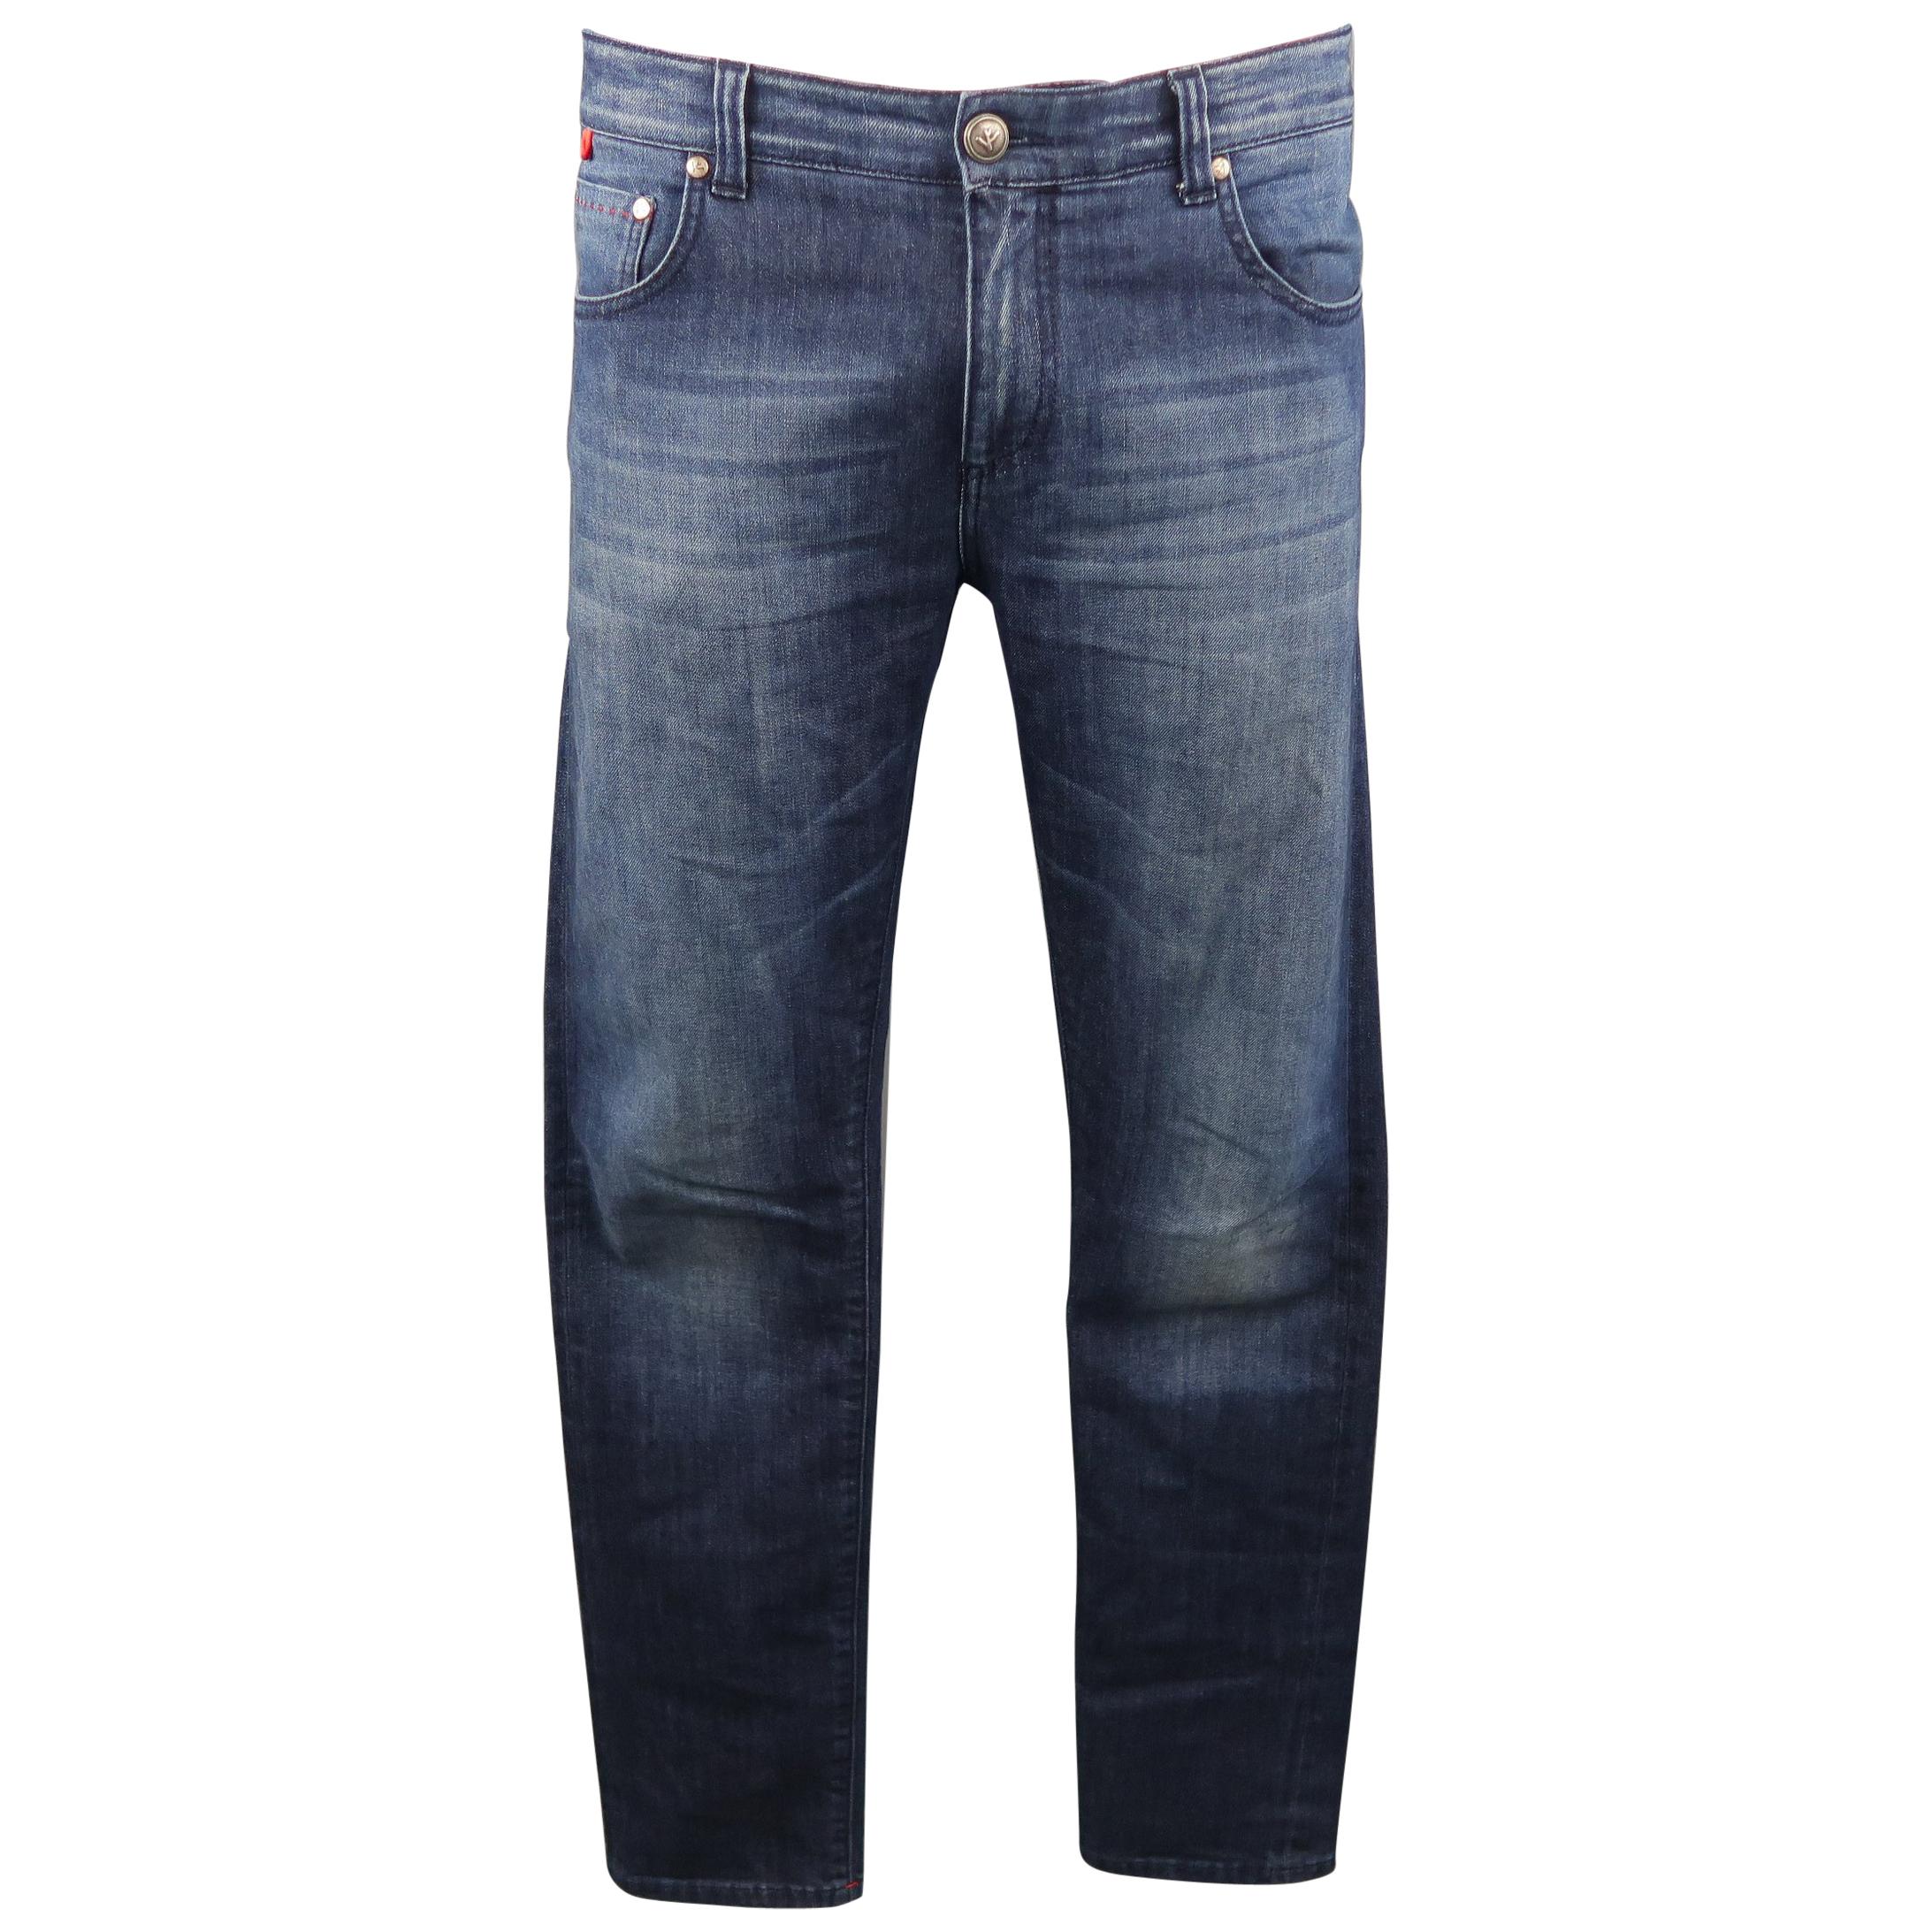 ISAIA Size 34 Indigo Wash Selvedge Denim Jeans